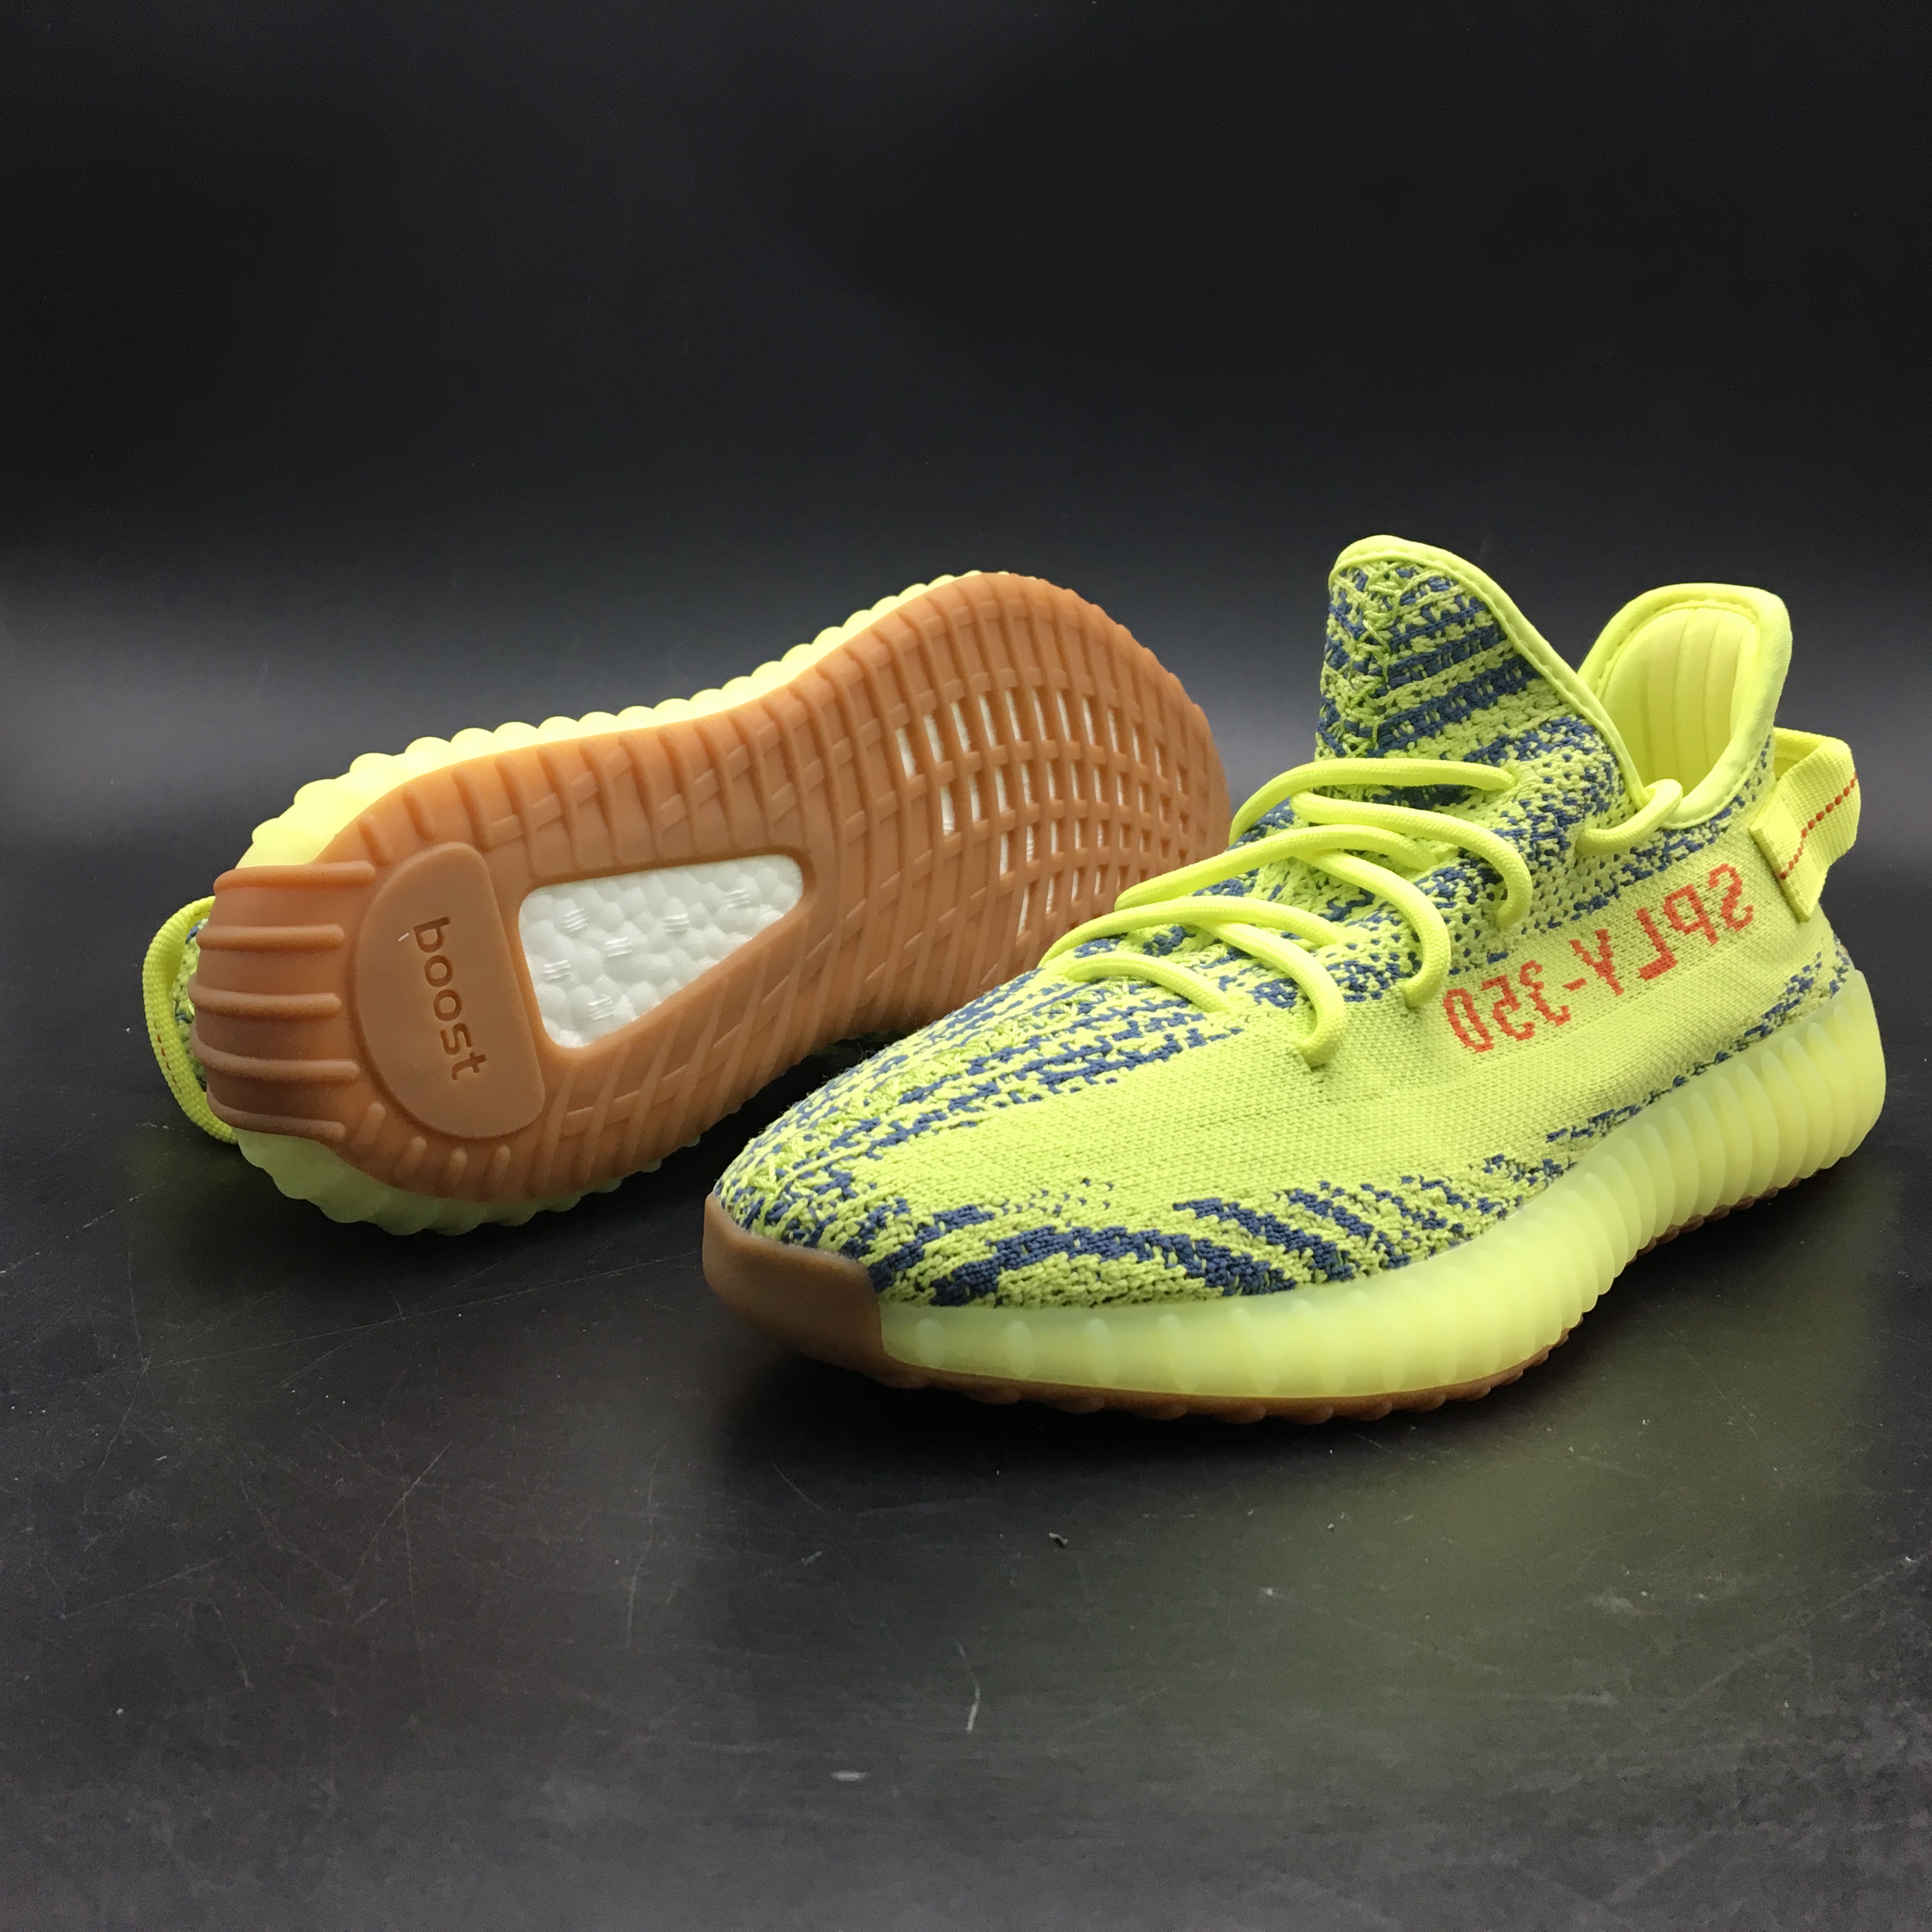 Adidas Originals Yeezy Boost 350 V2 Yebra B37572 11